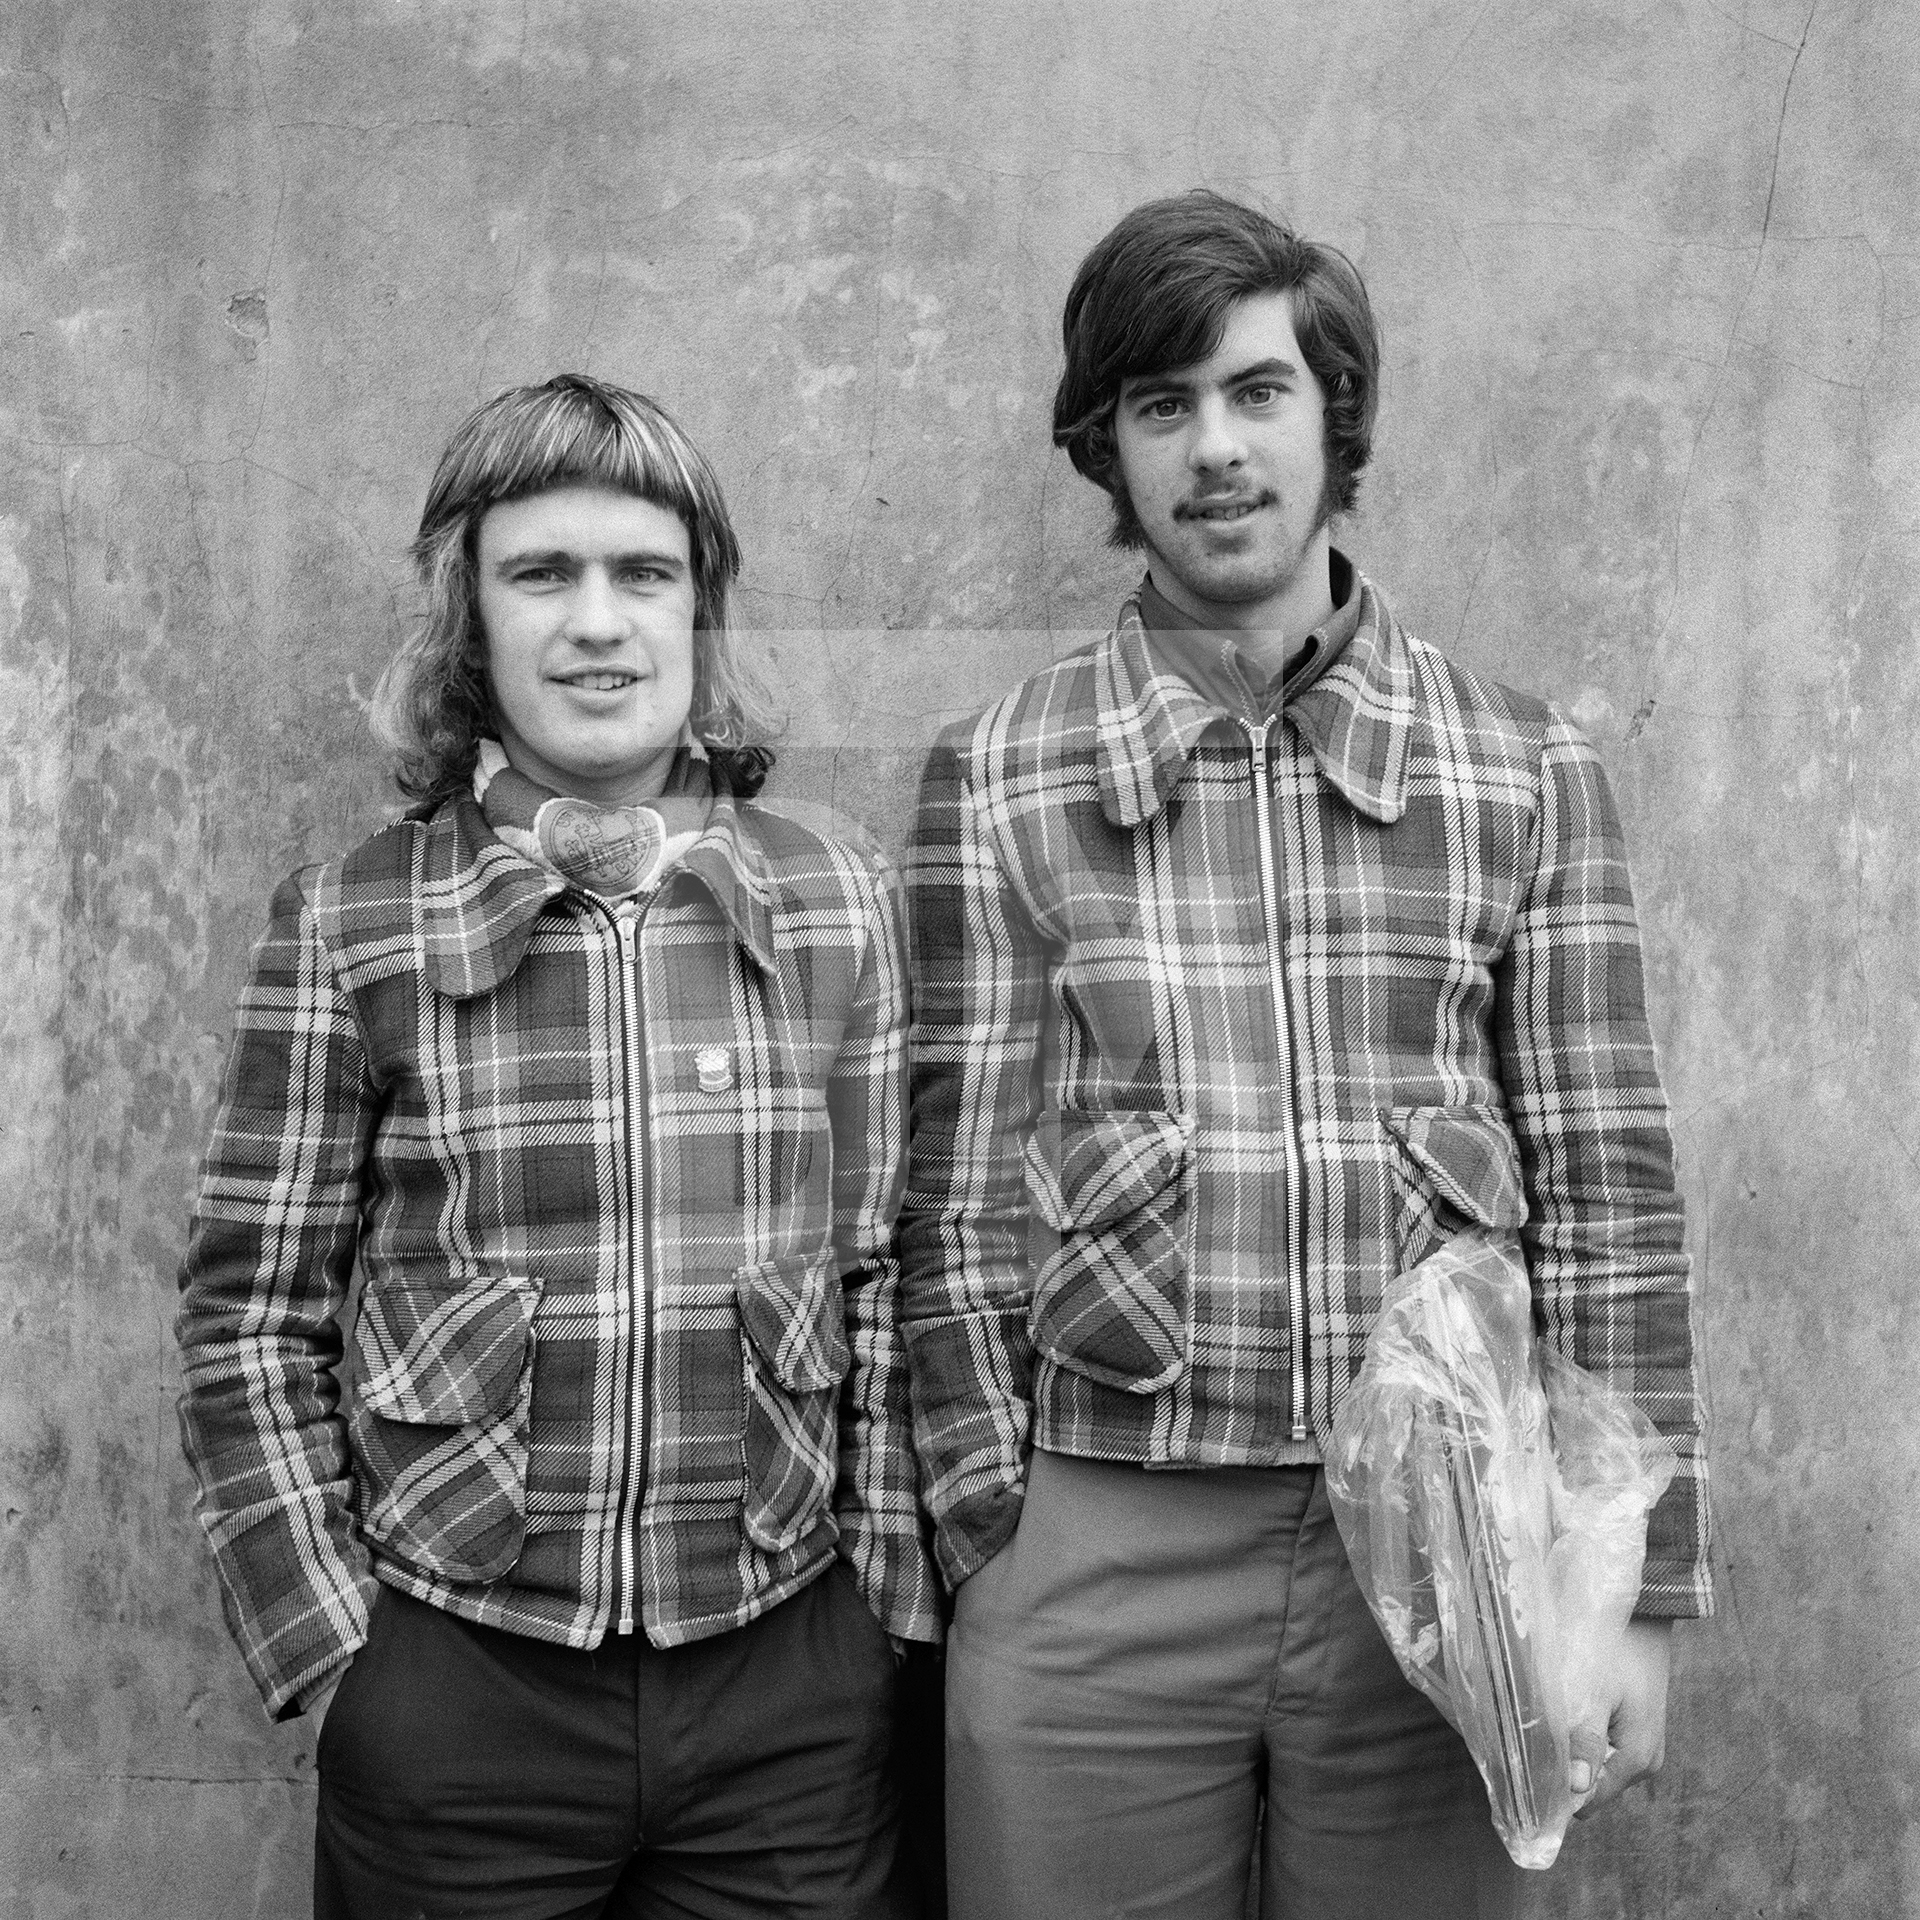 Identified as: left James O’Connor, right David Balderstone, Barrow-in-Furness, Cumbria. November 1974 by Daniel Meadows